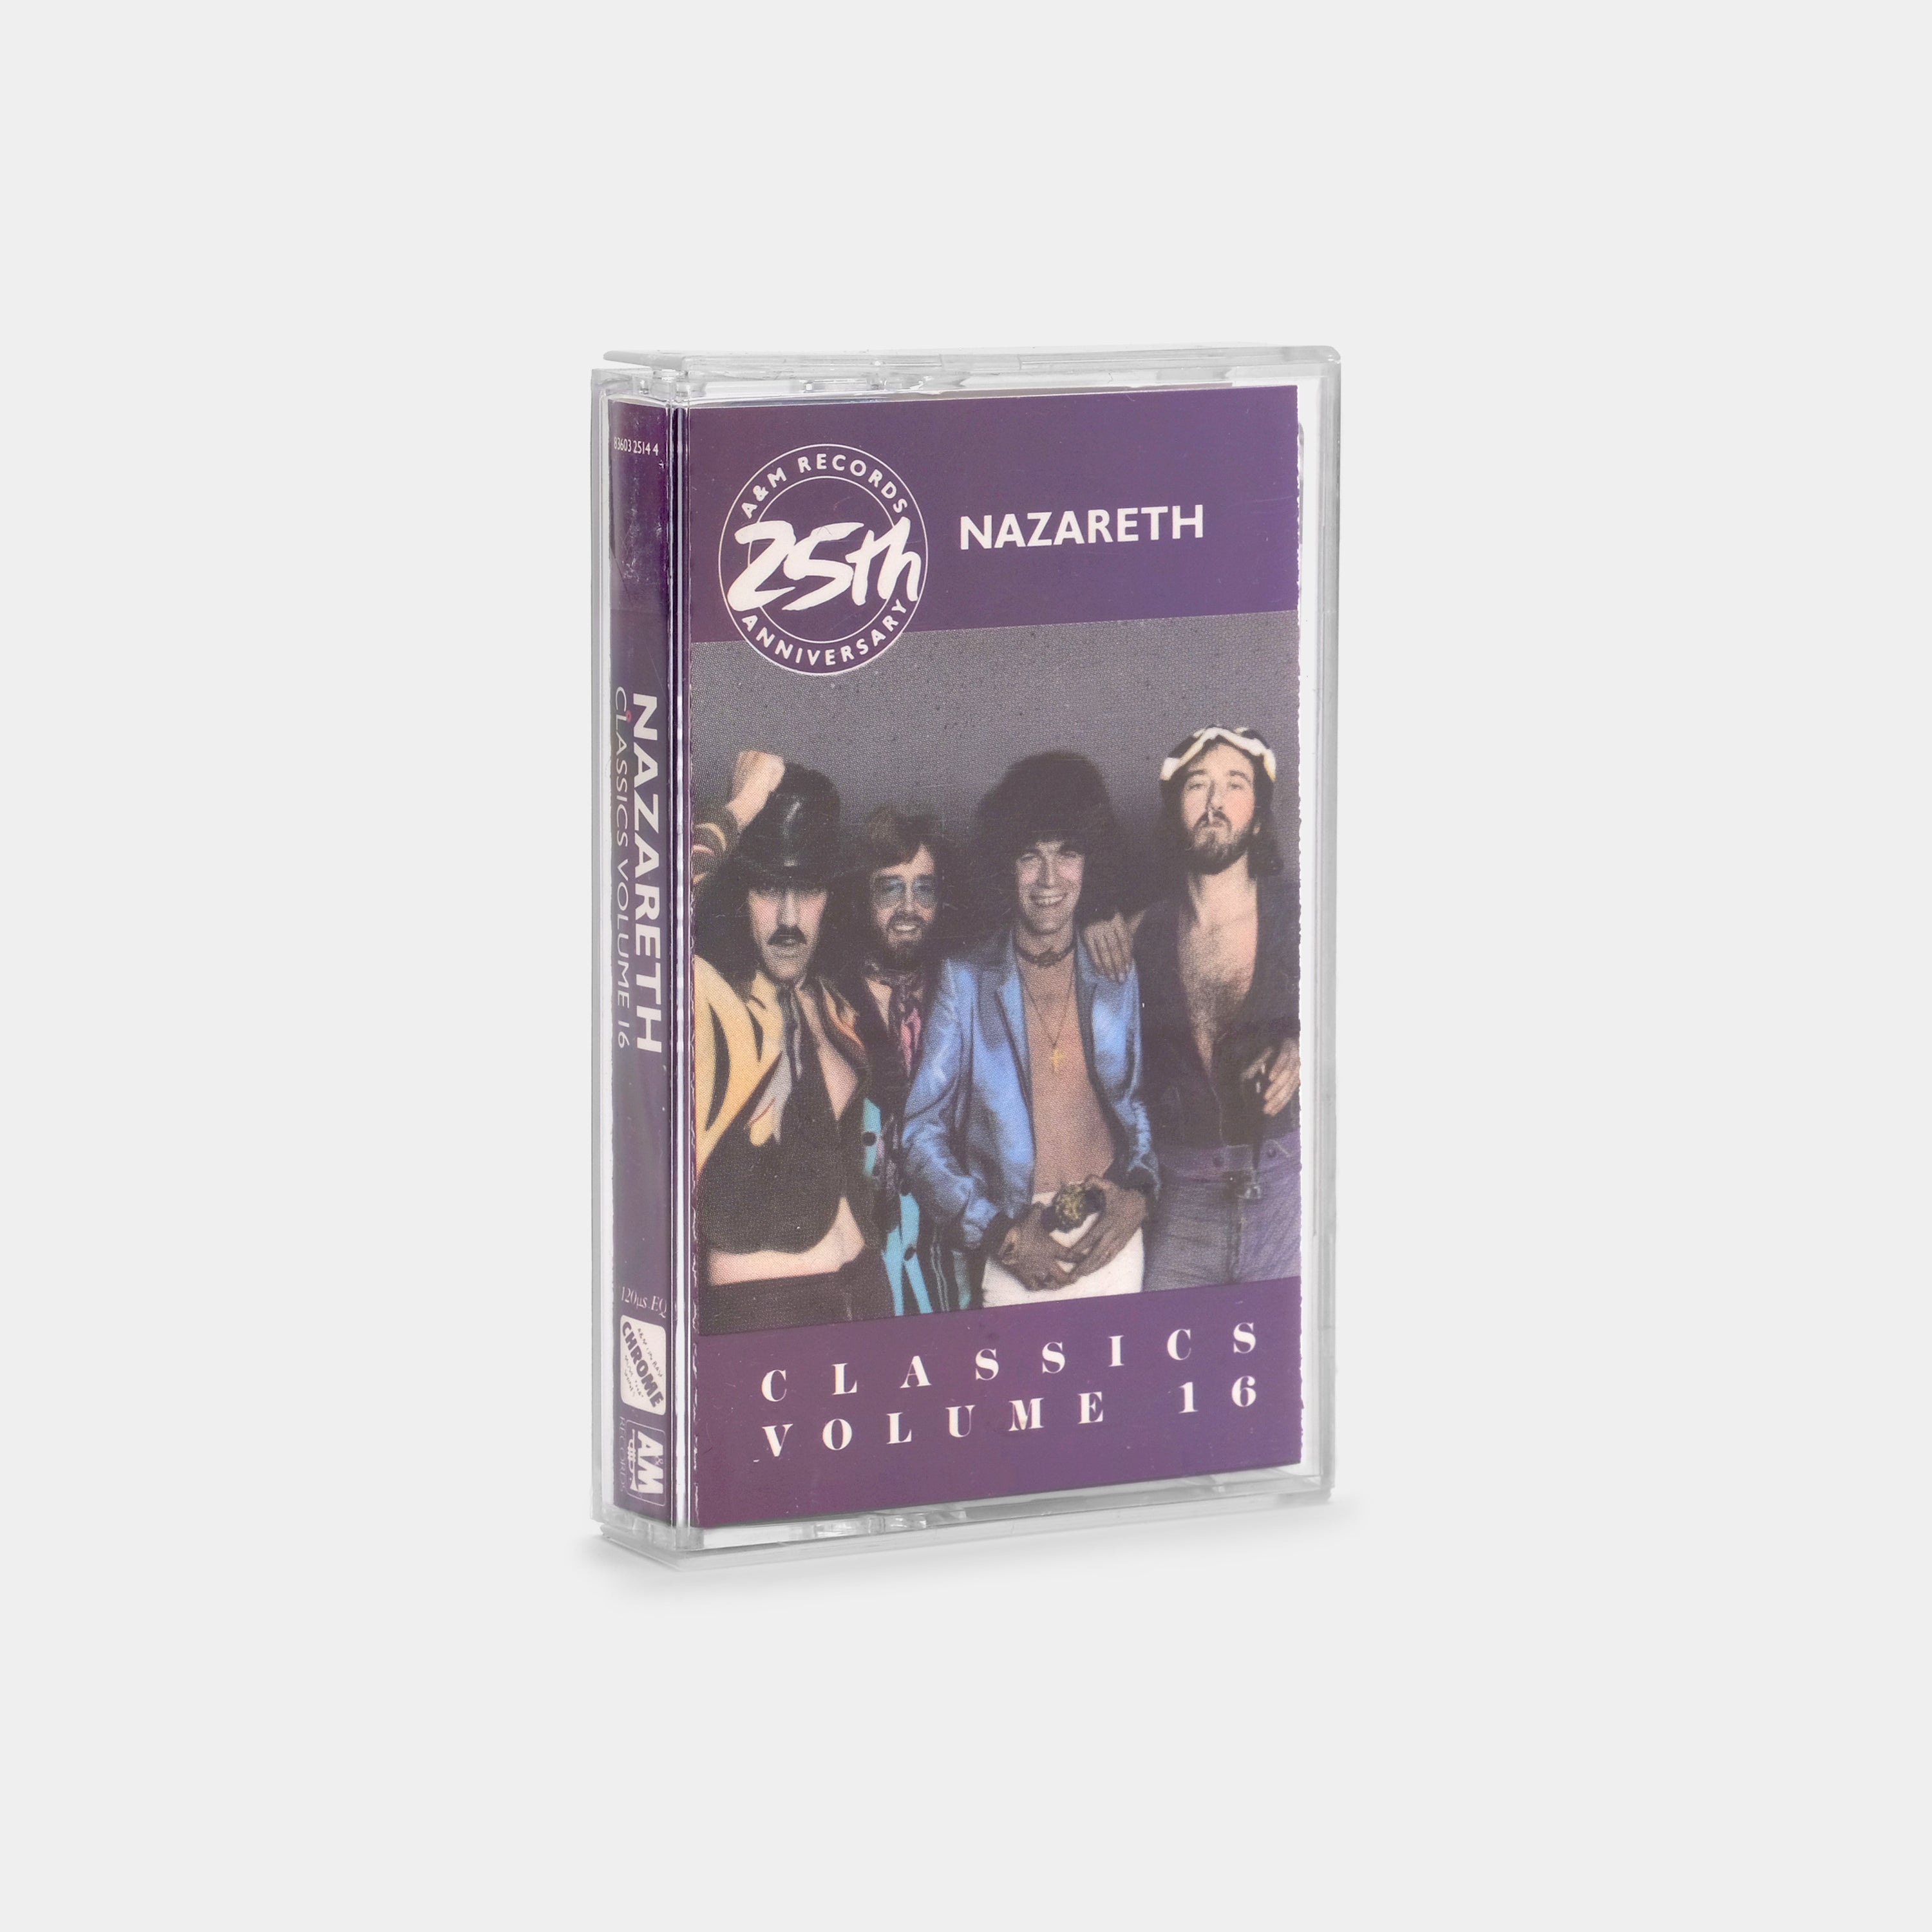 Nazareth - Classics Volume 16 Cassette Tape